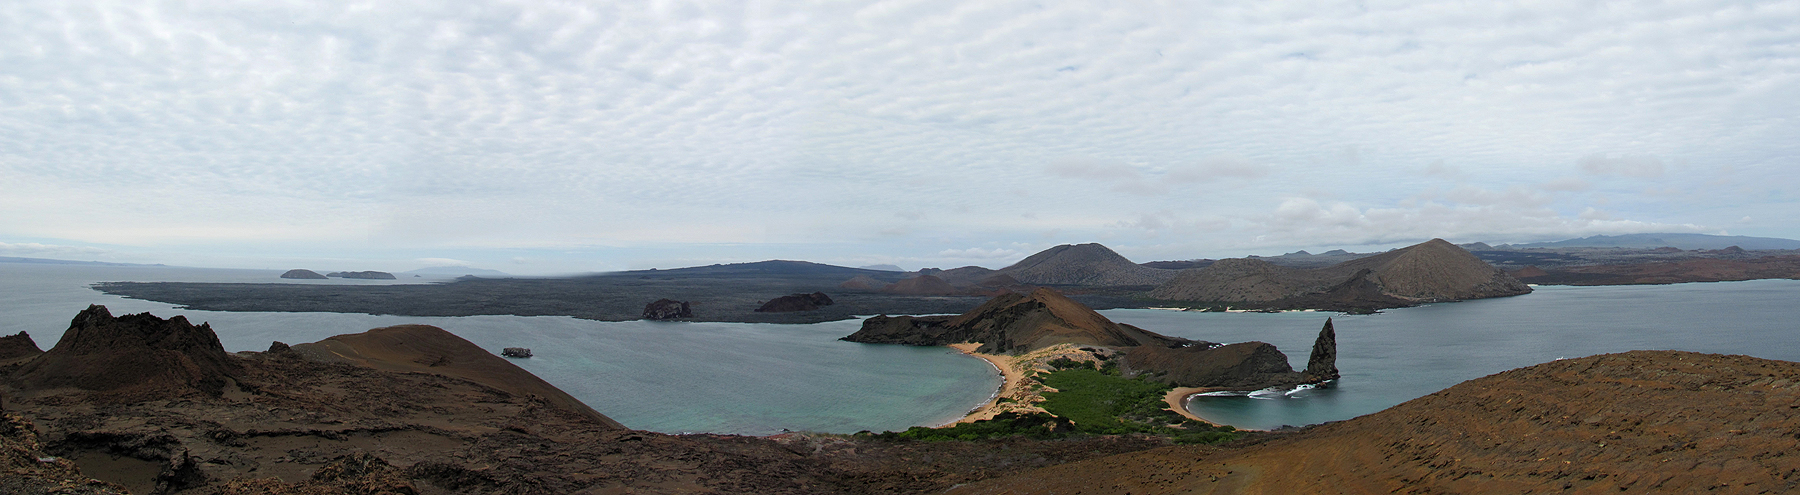 Galapagos Islands: the Land of Sir Darwin and Sir George